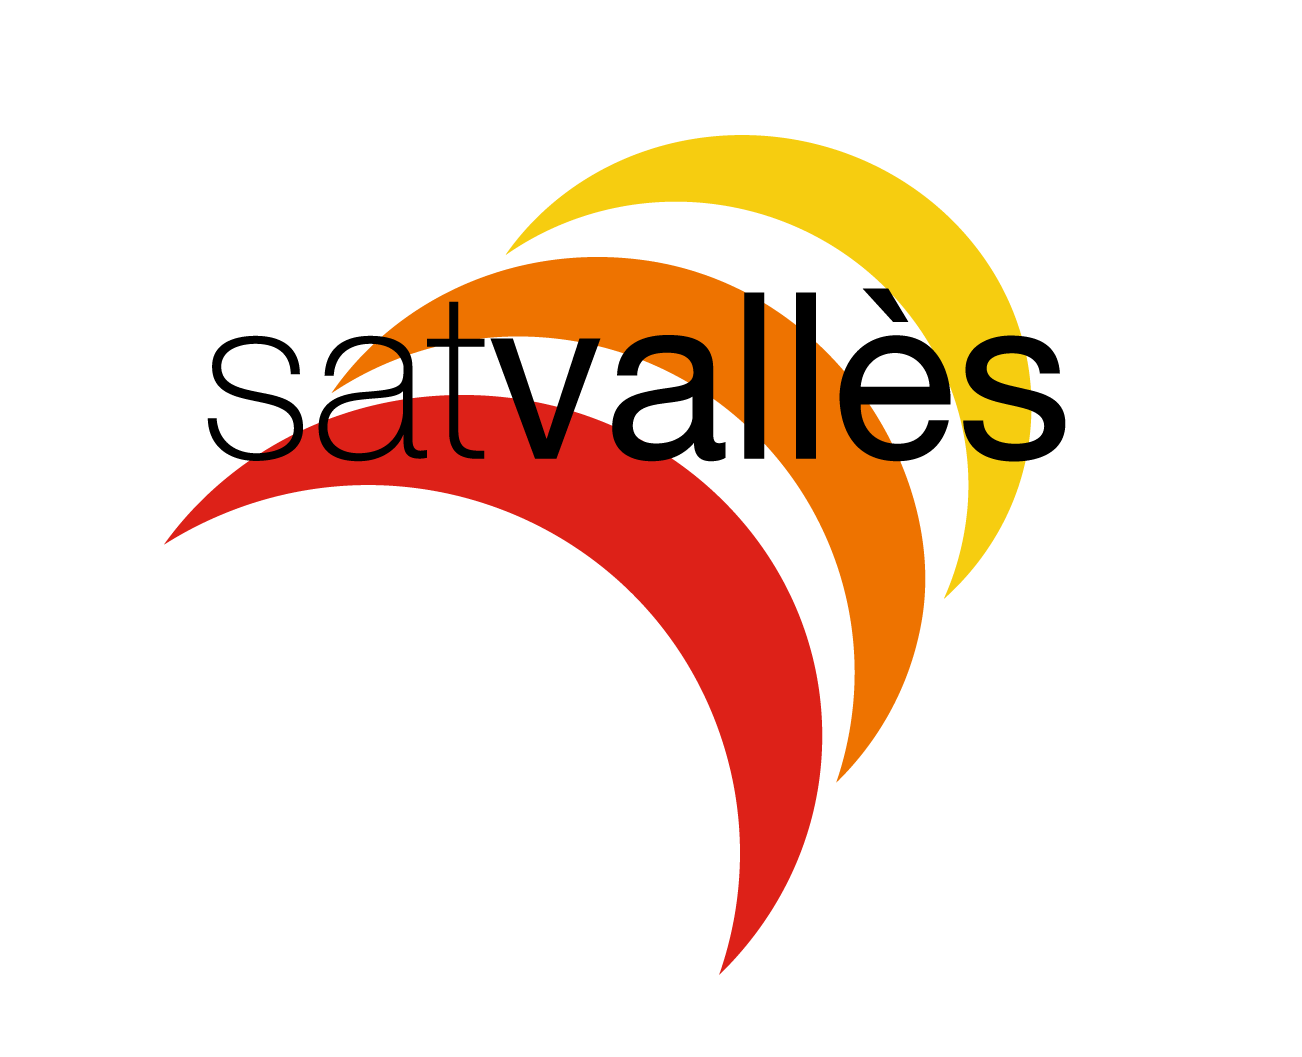 Foto de Logo Satvallès